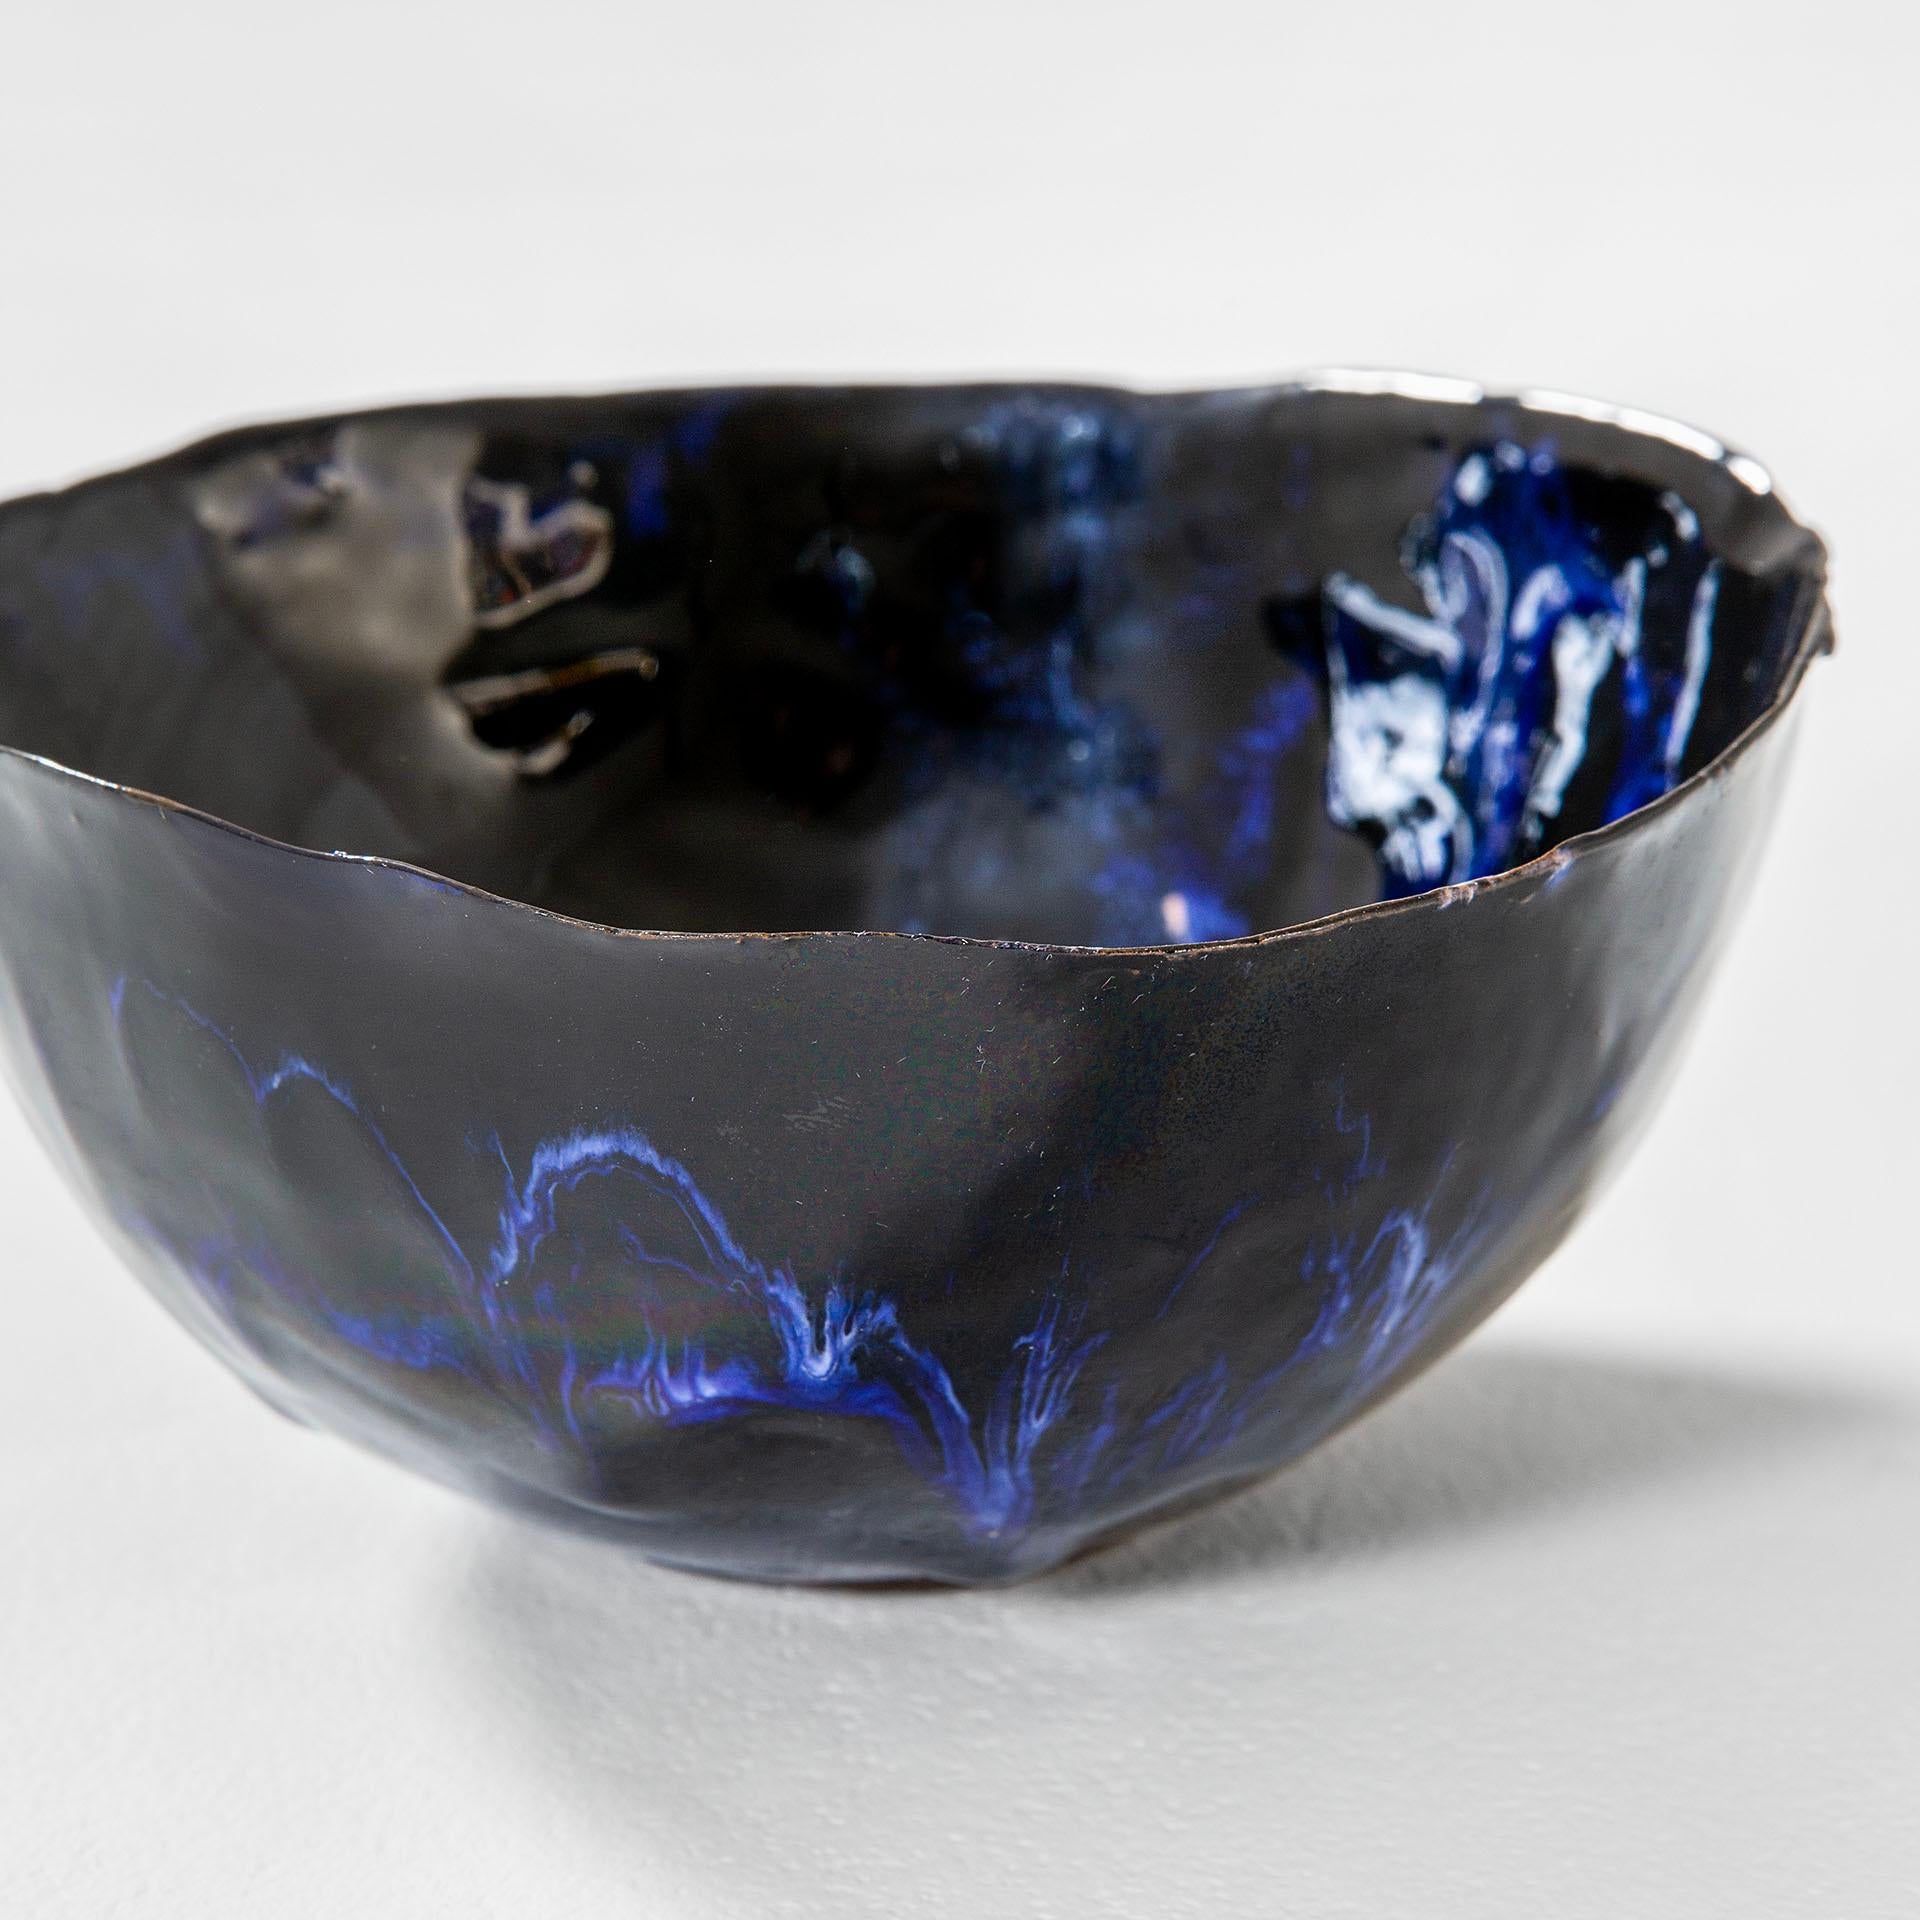 Italian 20th Century Fausto Melotti Decorative Bowl in Blue Enameled Ceramic, 60s For Sale